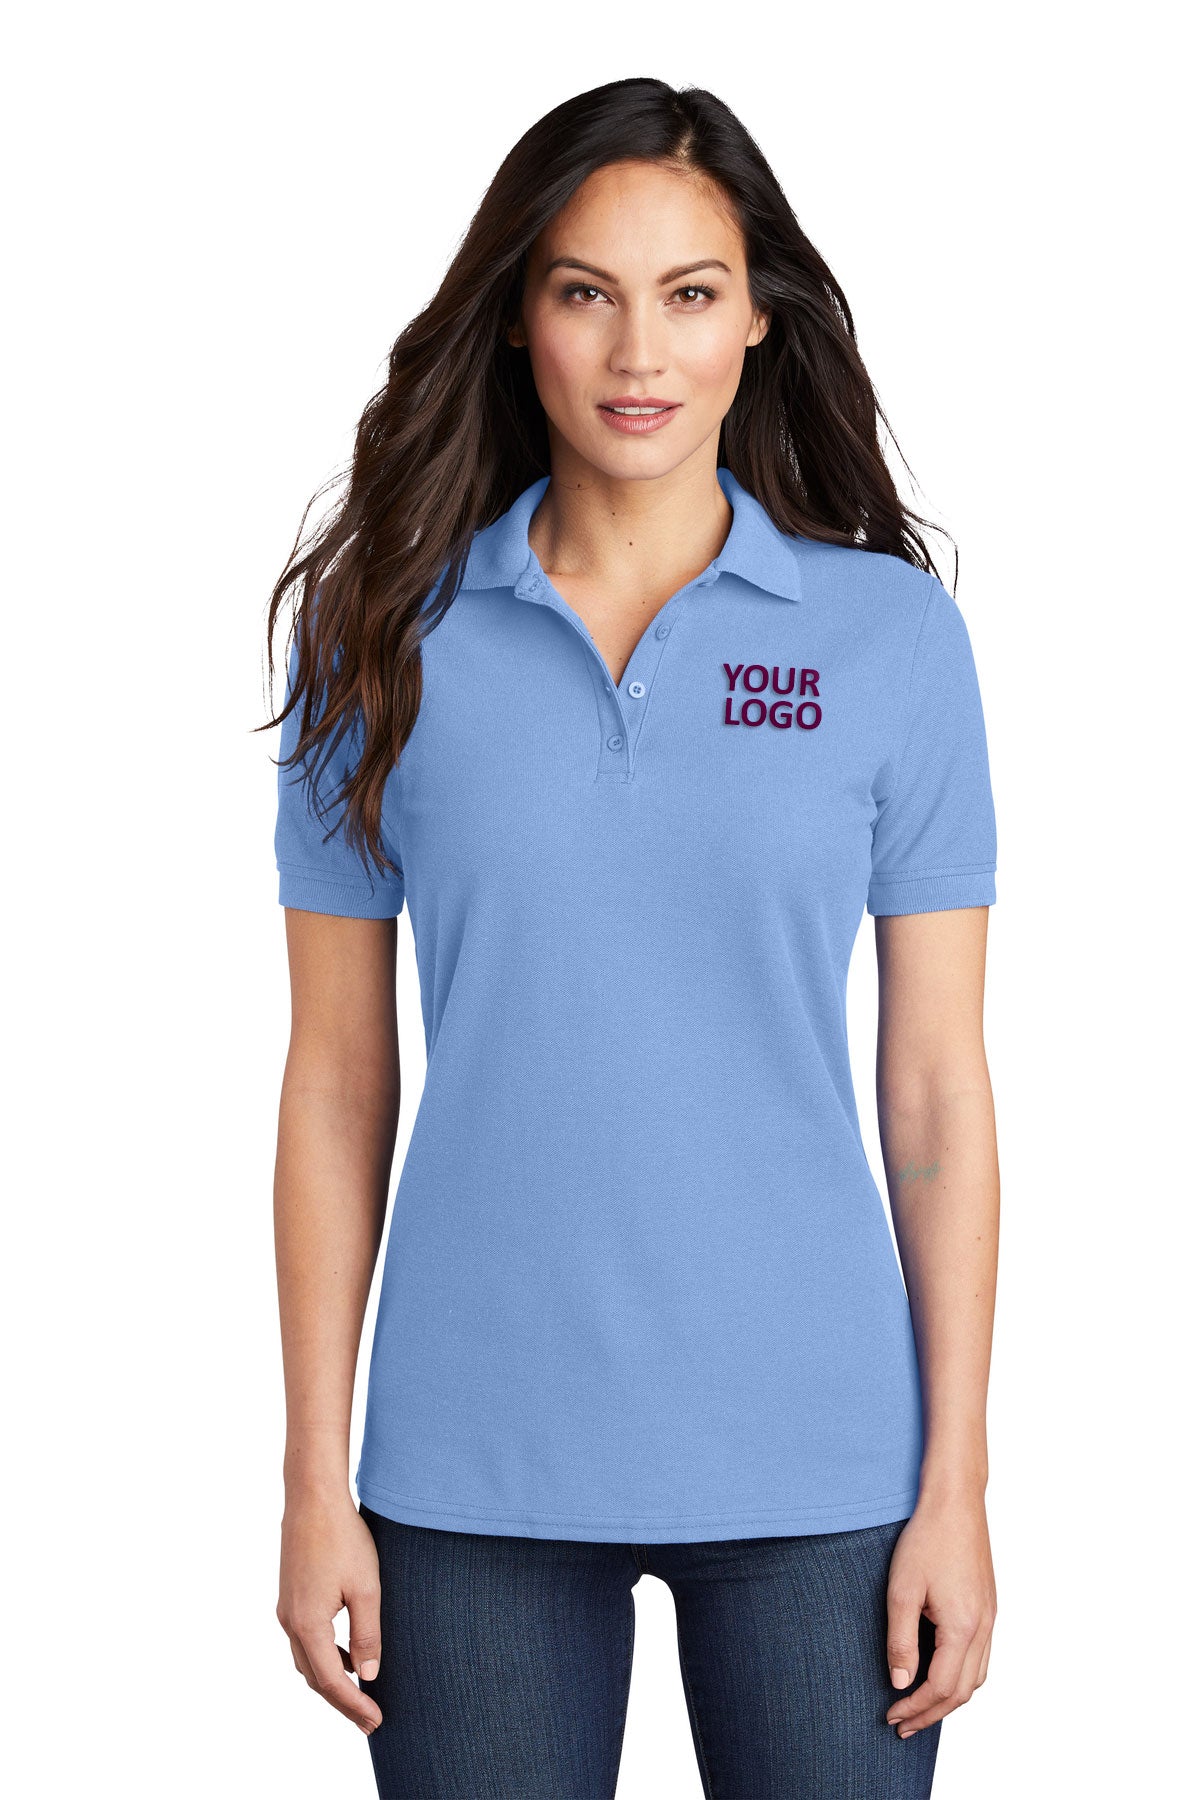 port & company light blue lkp155 custom polo shirts with logo